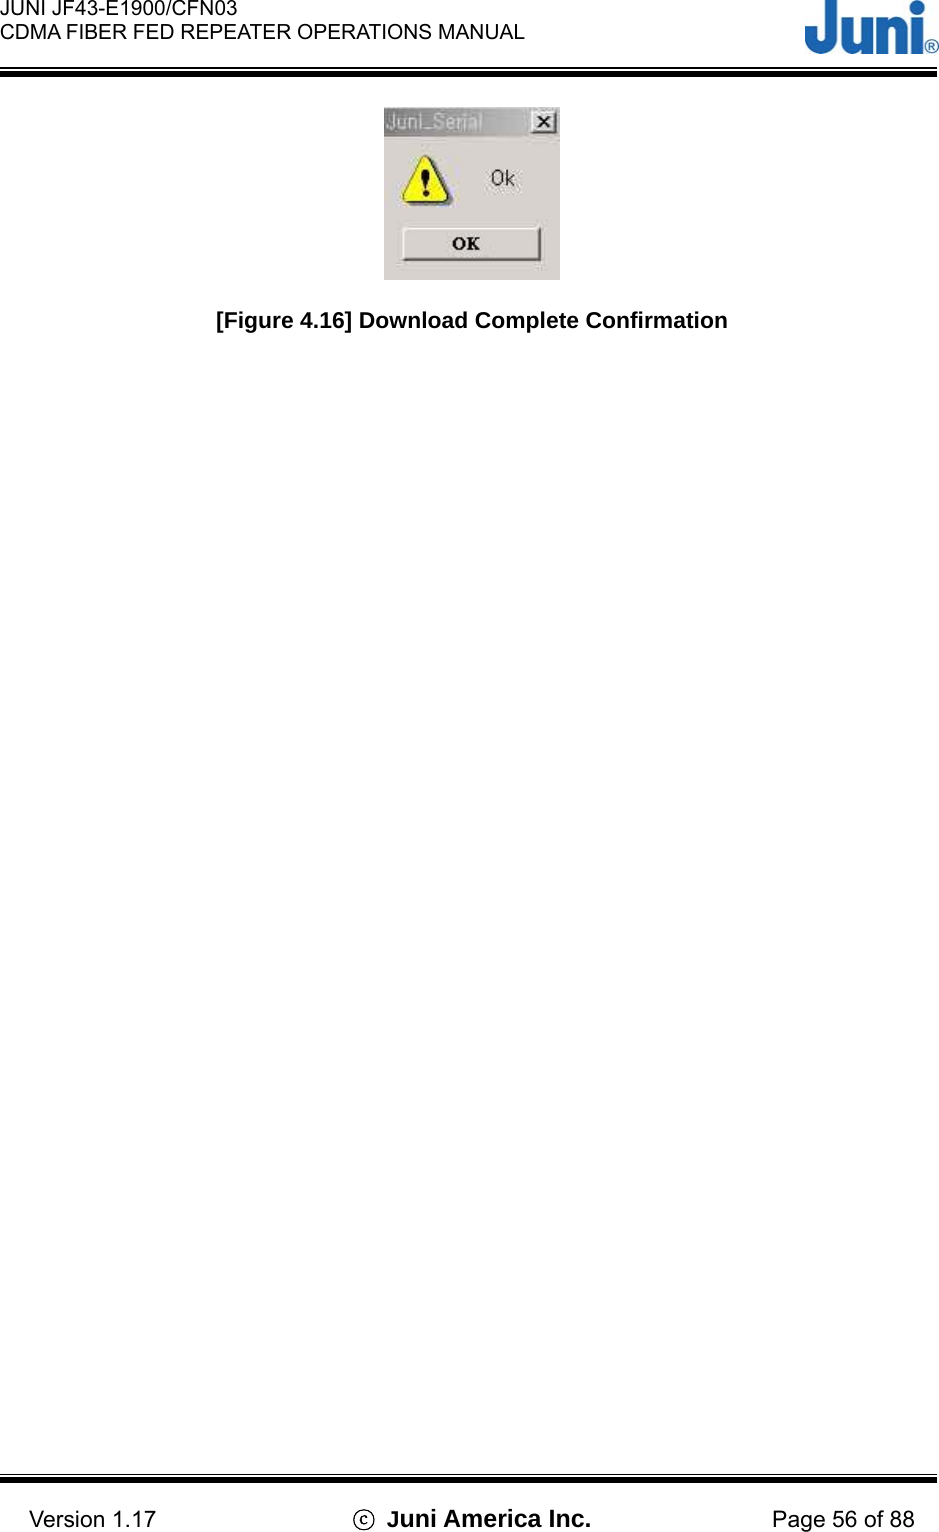  JUNI JF43-E1900/CFN03 CDMA FIBER FED REPEATER OPERATIONS MANUAL                                    Version 1.17  ⓒ Juni America Inc. Page 56 of 88  [Figure 4.16] Download Complete Confirmation  